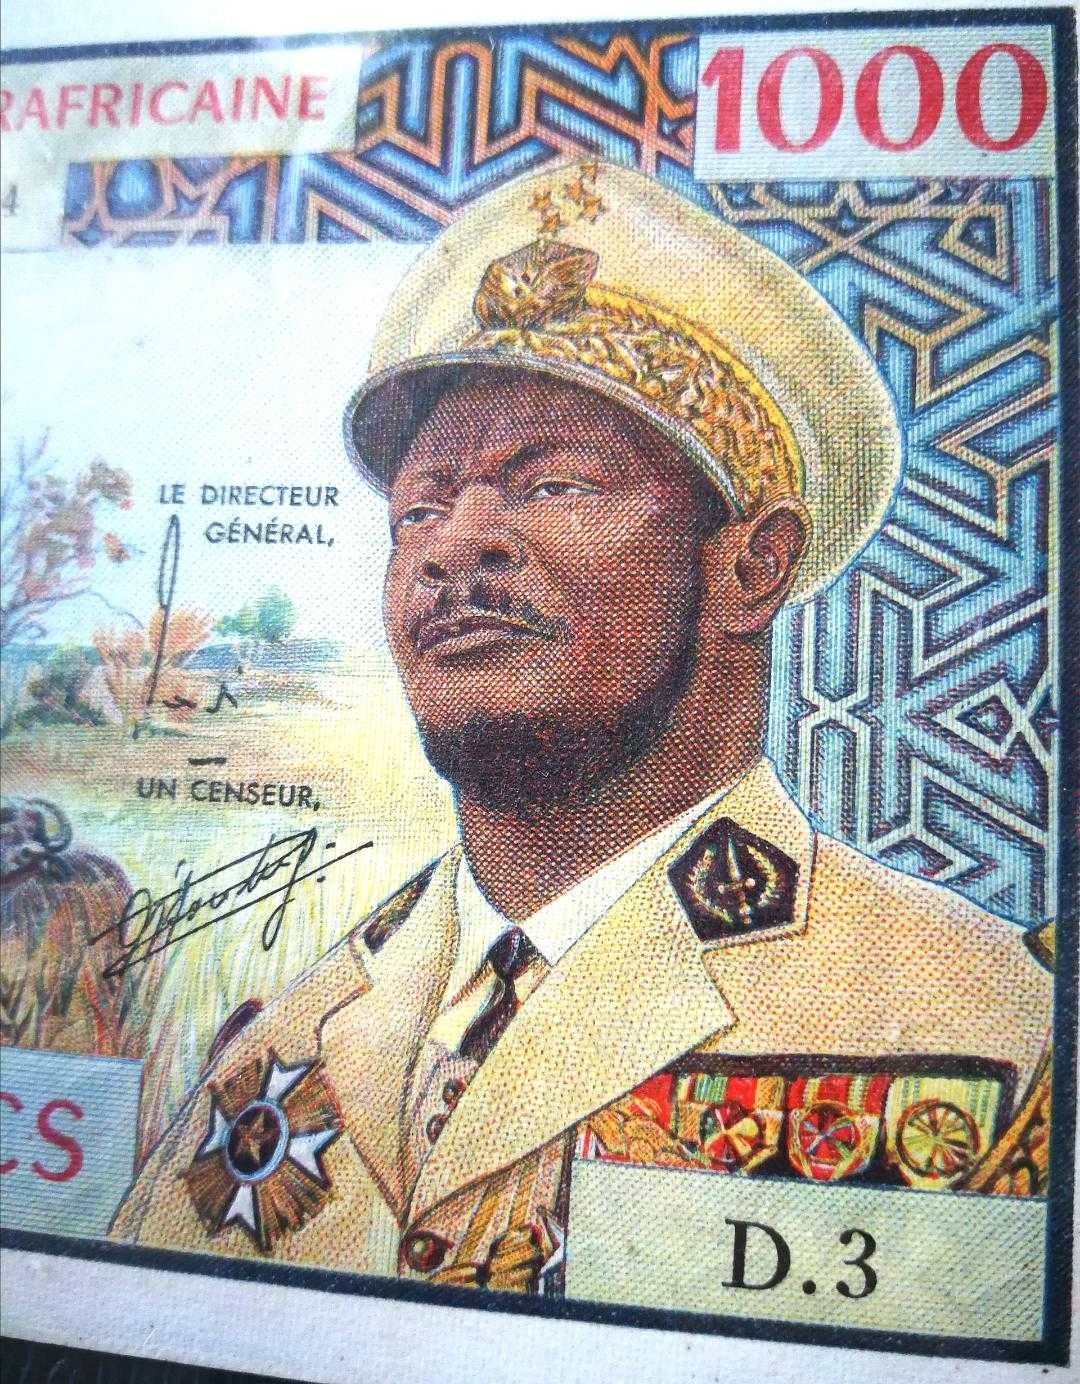 Republica Centrafricana (Bokassa) 1000 Franci 1974 gradata PMG